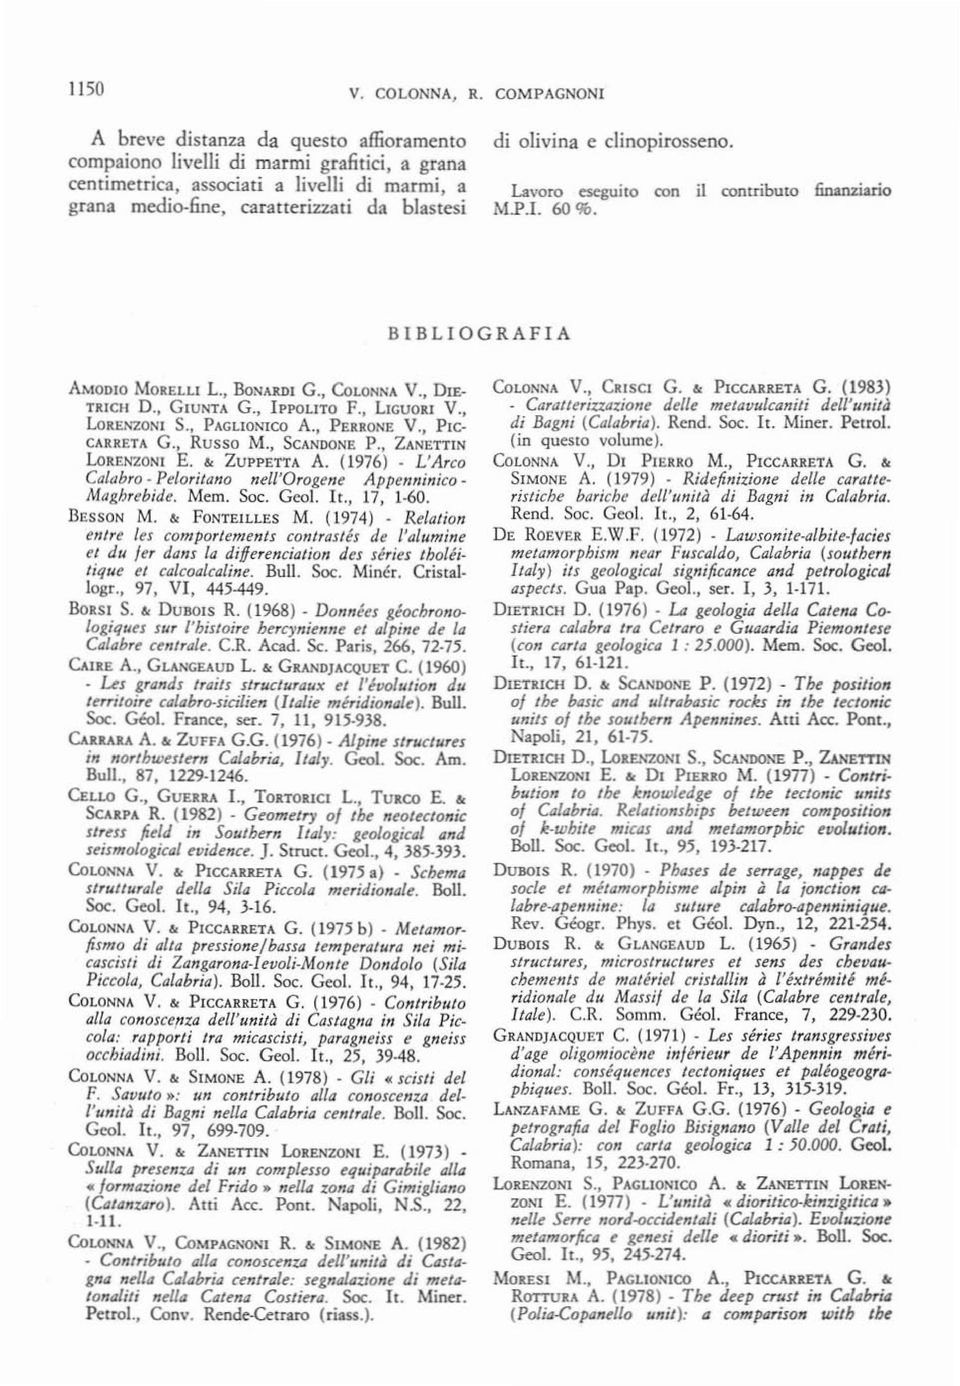 , CoLONNA V., DIE TIUOI D., GIUNTA G., IPPOLITO F., LJ(;UORI V., LoRENZONI S., PAGLlONICO A. PEIlONE V., PIC CAUU'" G., Russo M., $candone P., ZANETTIN LoRENZONI E. II< ZUPPETTA A. (1976).